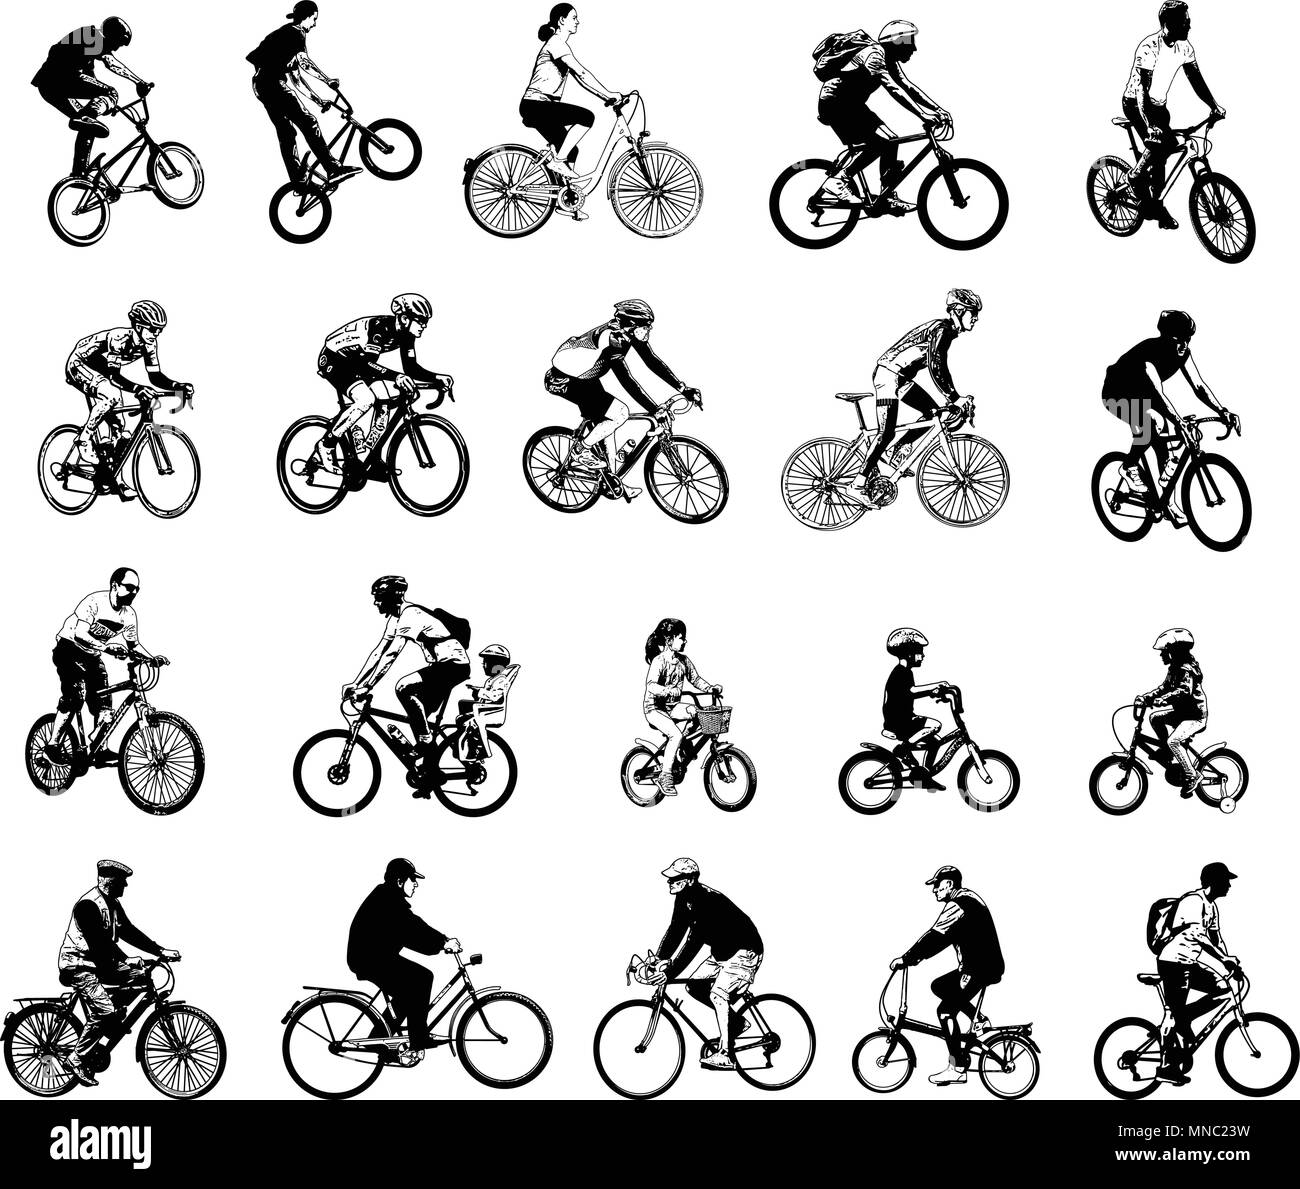 Sammlung von 20 Skizze Radfahrer-Vektor Stock Vektor